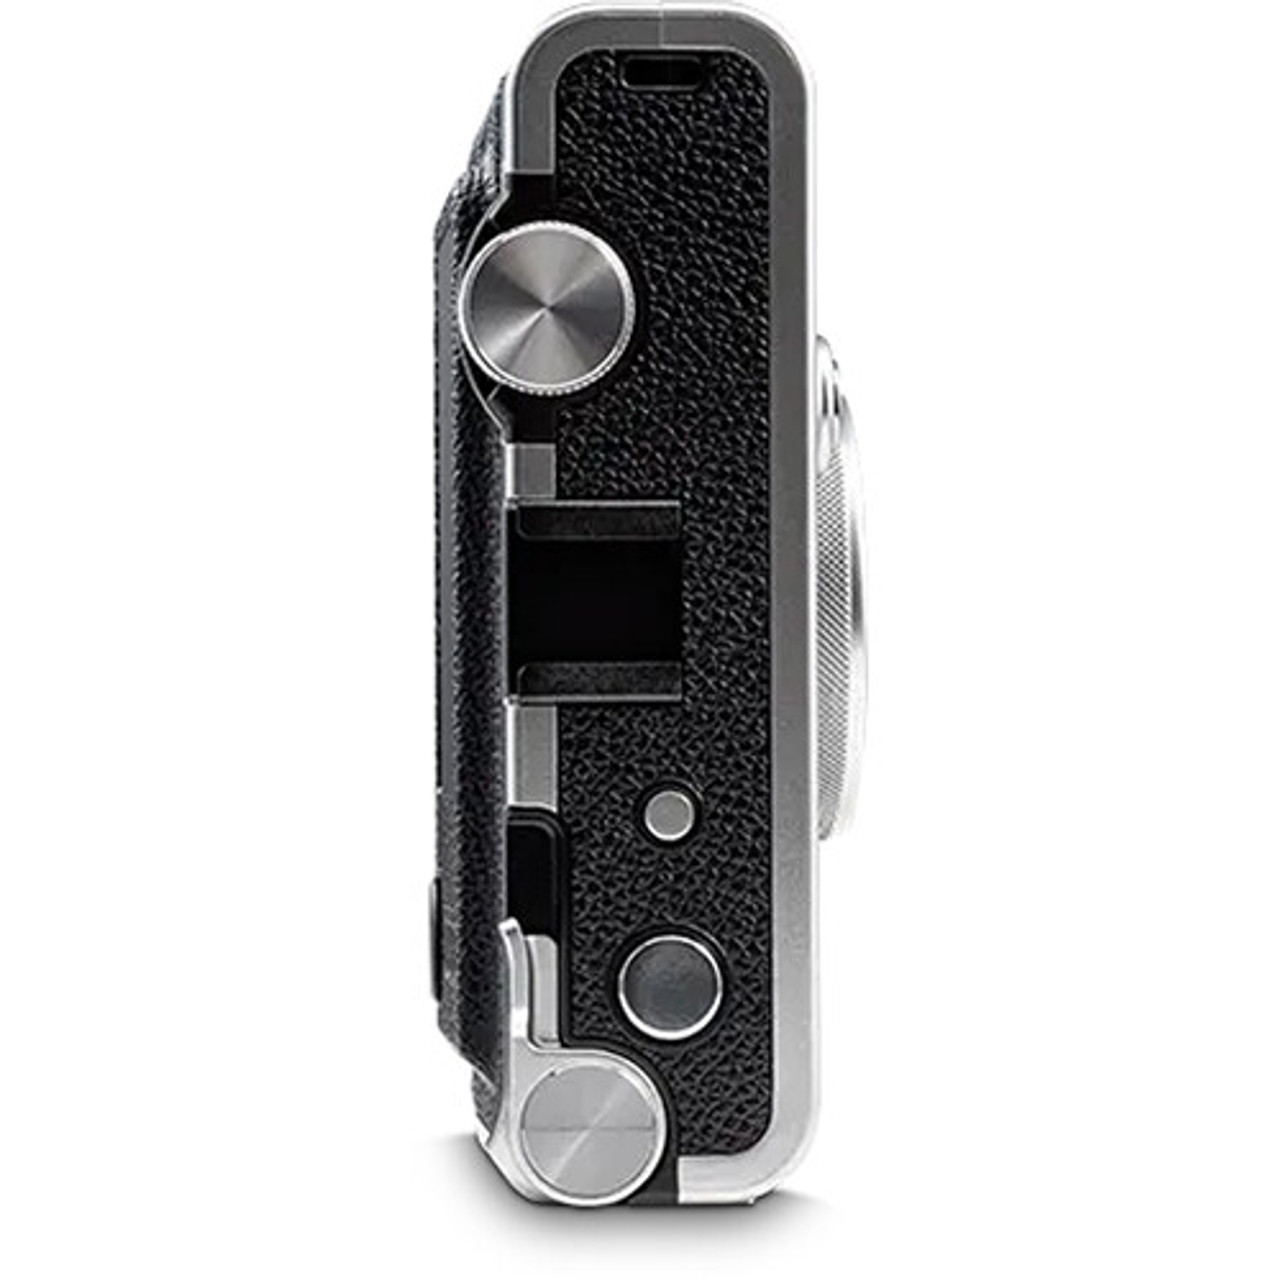 Fujifilm's new Instax Mini Evo Hybrid is an instant camera with 10